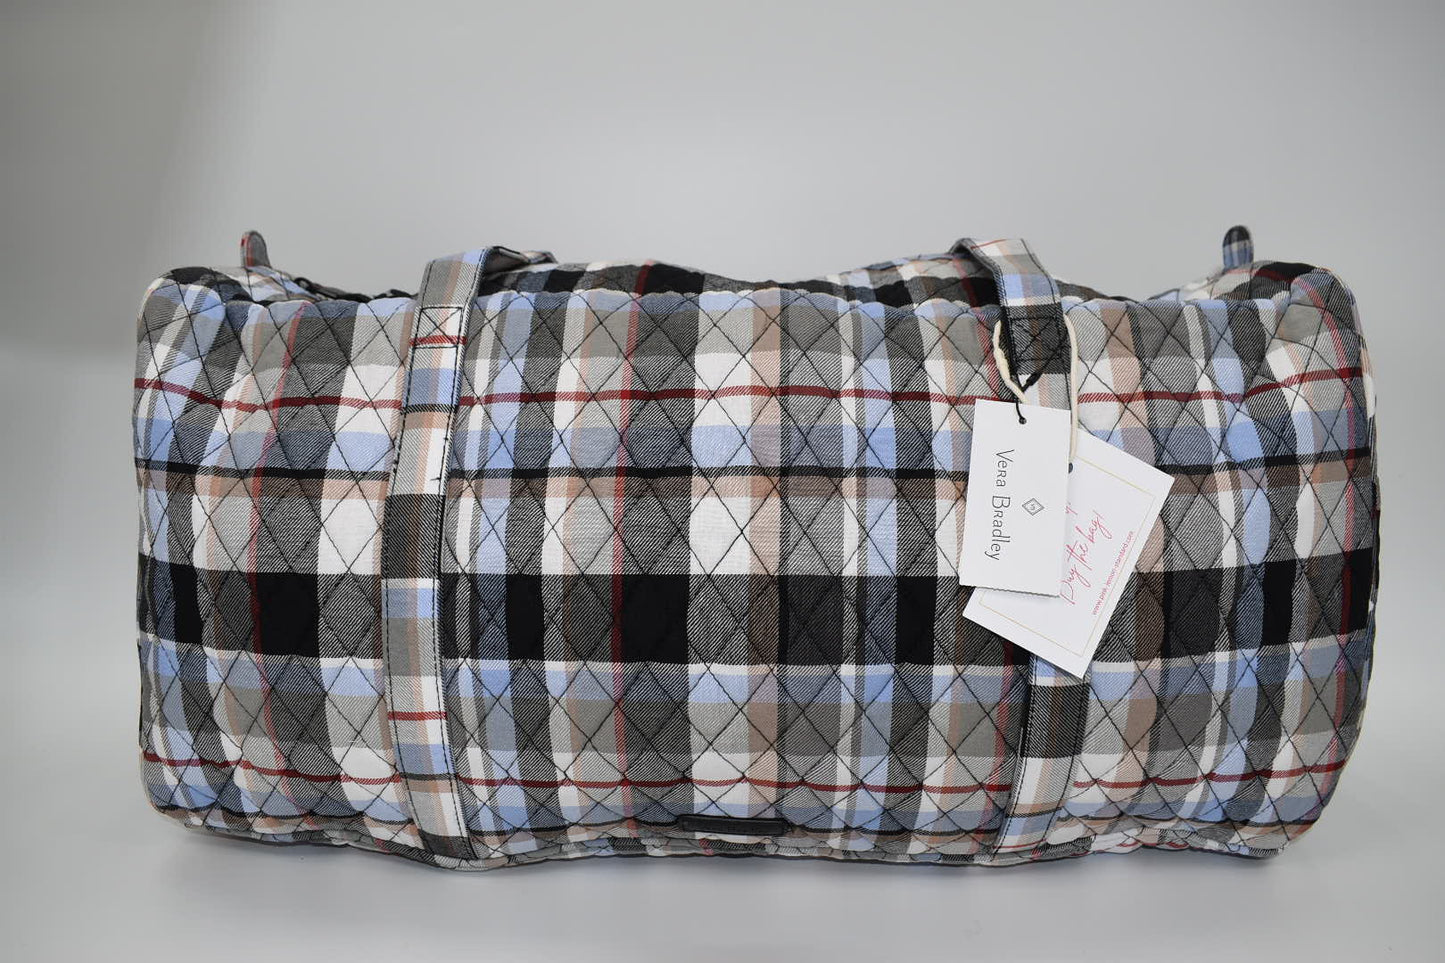 Vera Bradley Large Traveler Duffel Bag in "Perfectly Plaid" Pattern